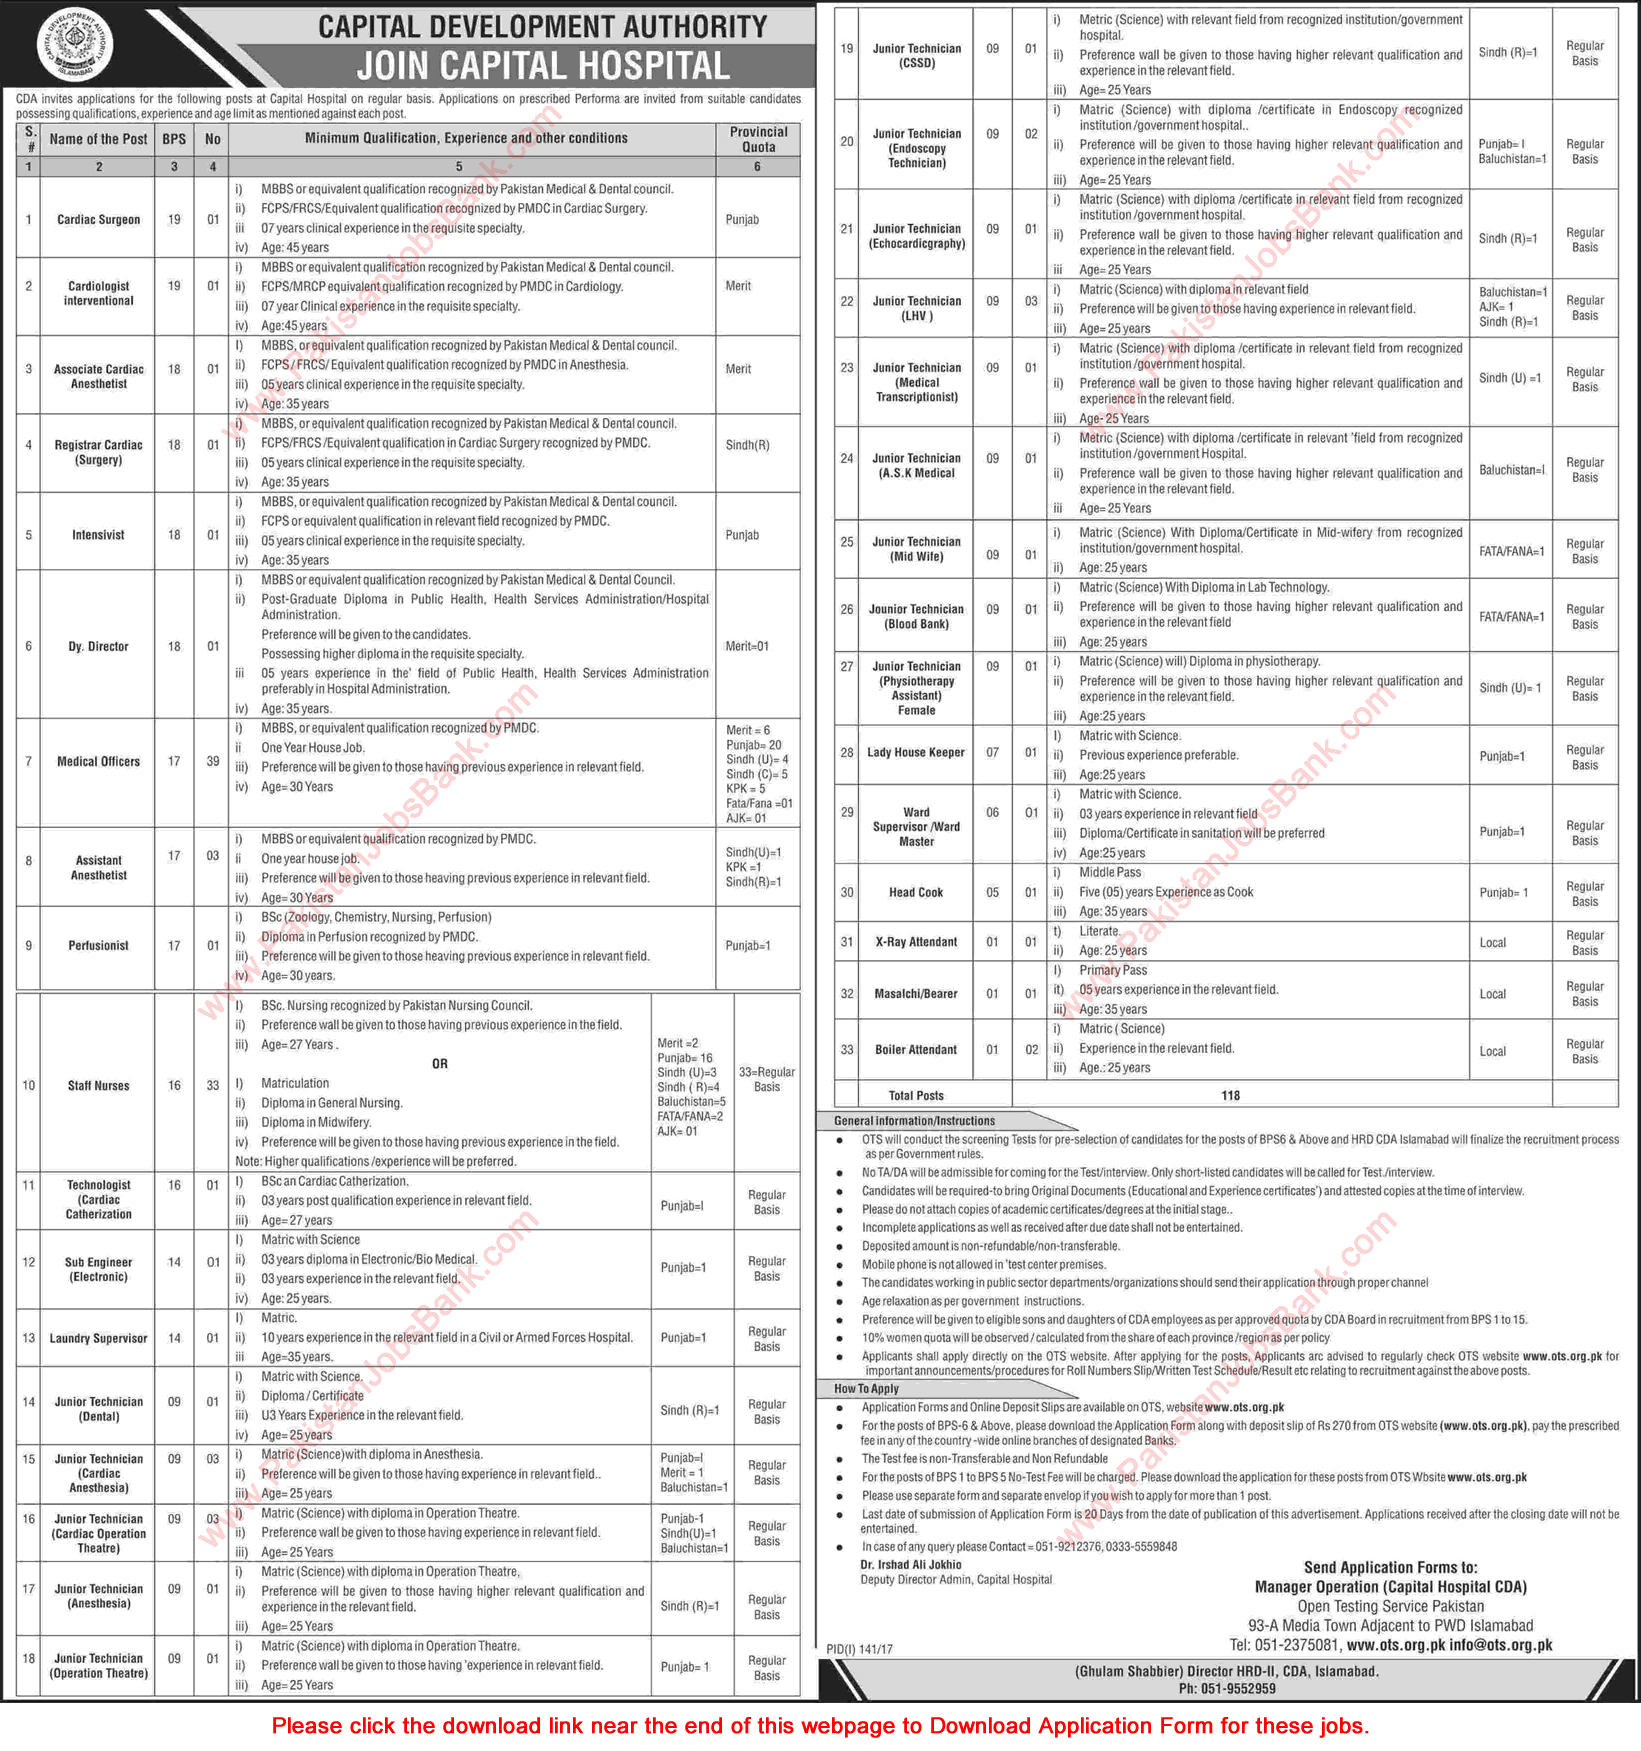 CDA Hospital Islamabad Jobs 2017 July OTS Application Form Medical Officers, Staff Nurses & Others Latest